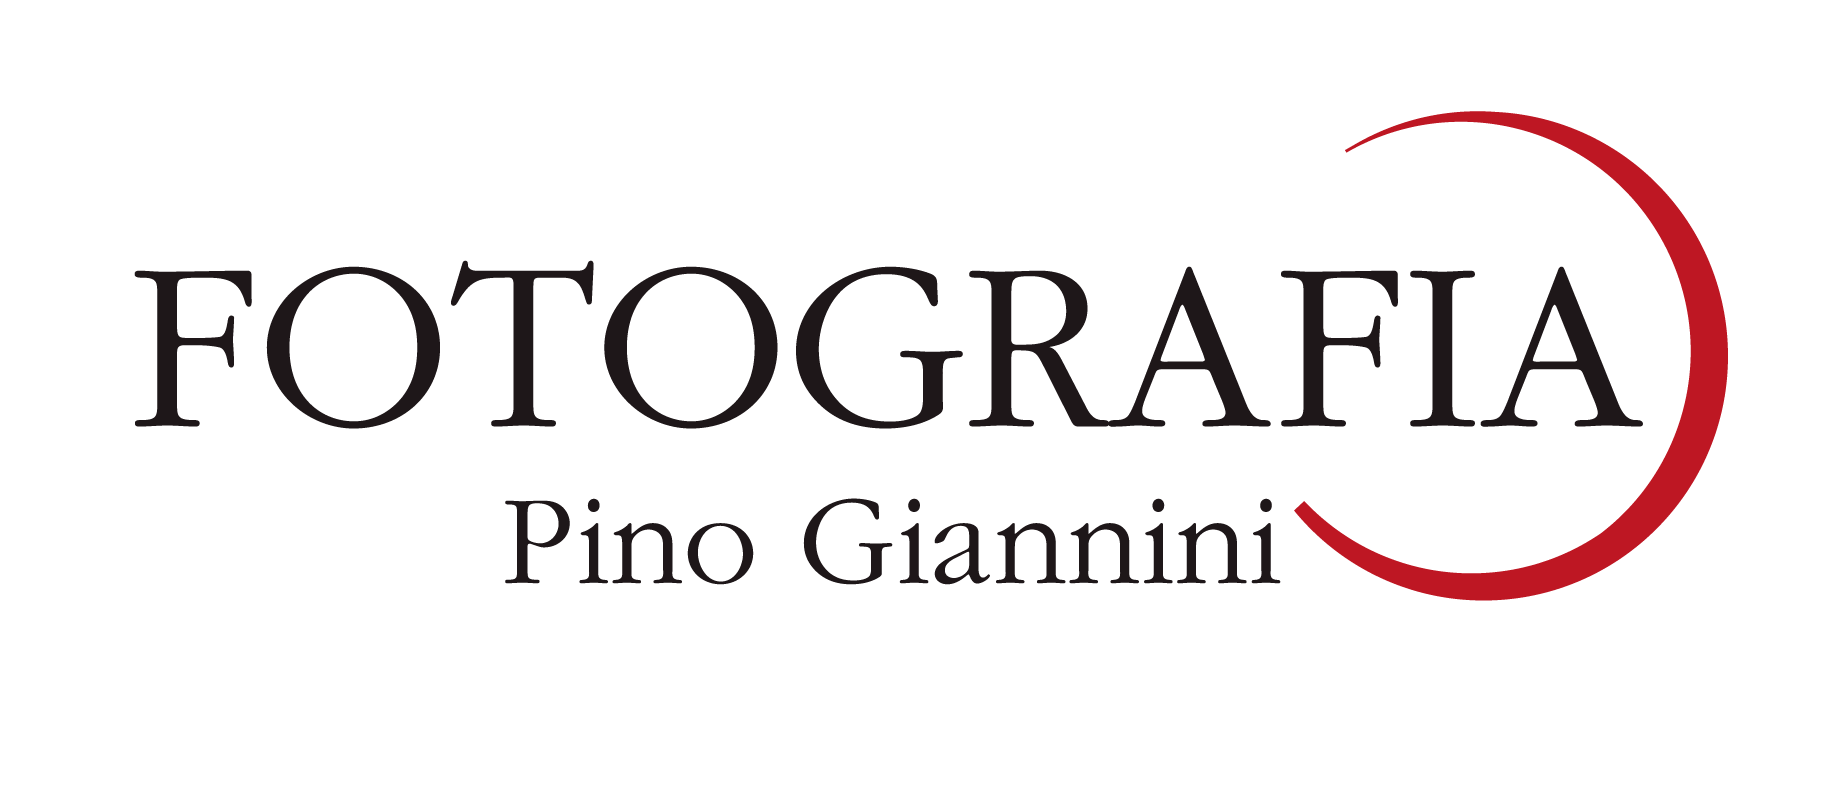 Pino Giannini Fotografo